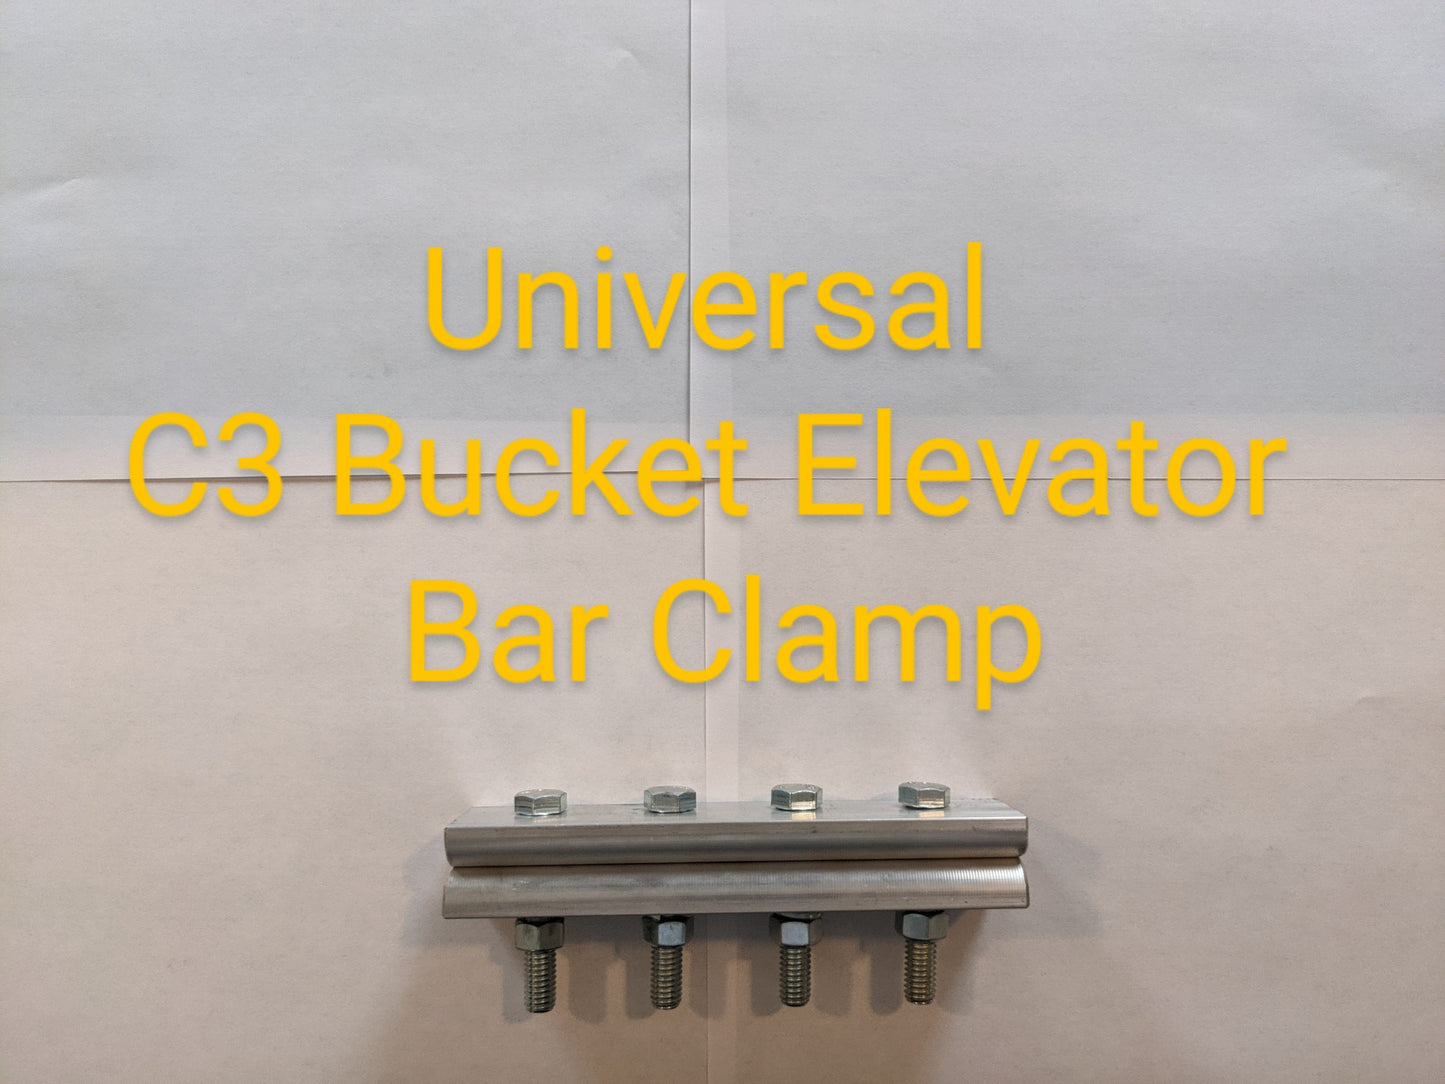 Universal Bar Clamp Kit, C-3